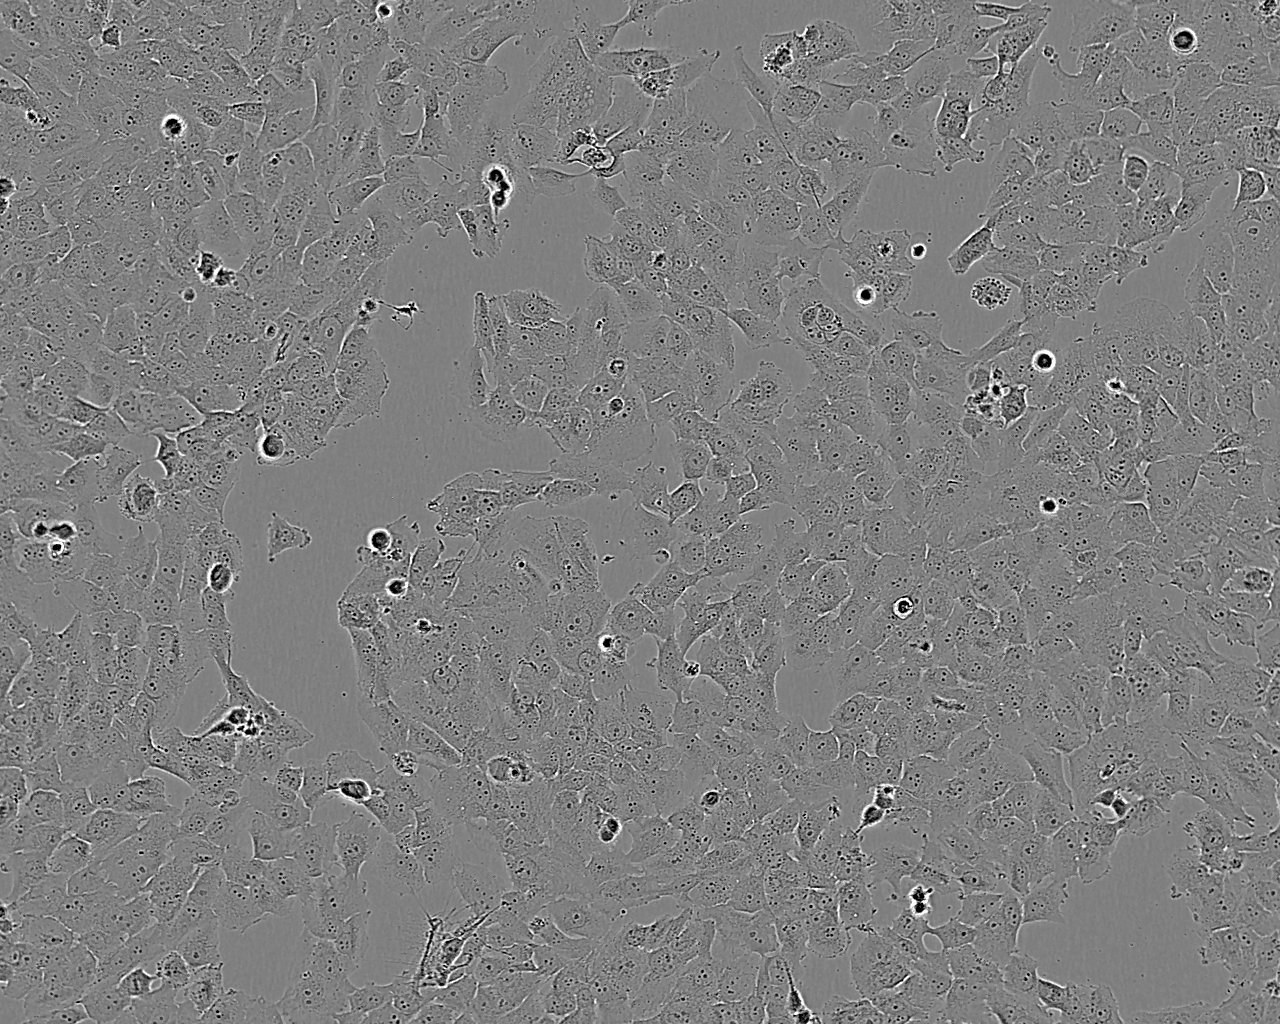 KP4 Cell:人胰腺癌细胞系,KP4 Cell